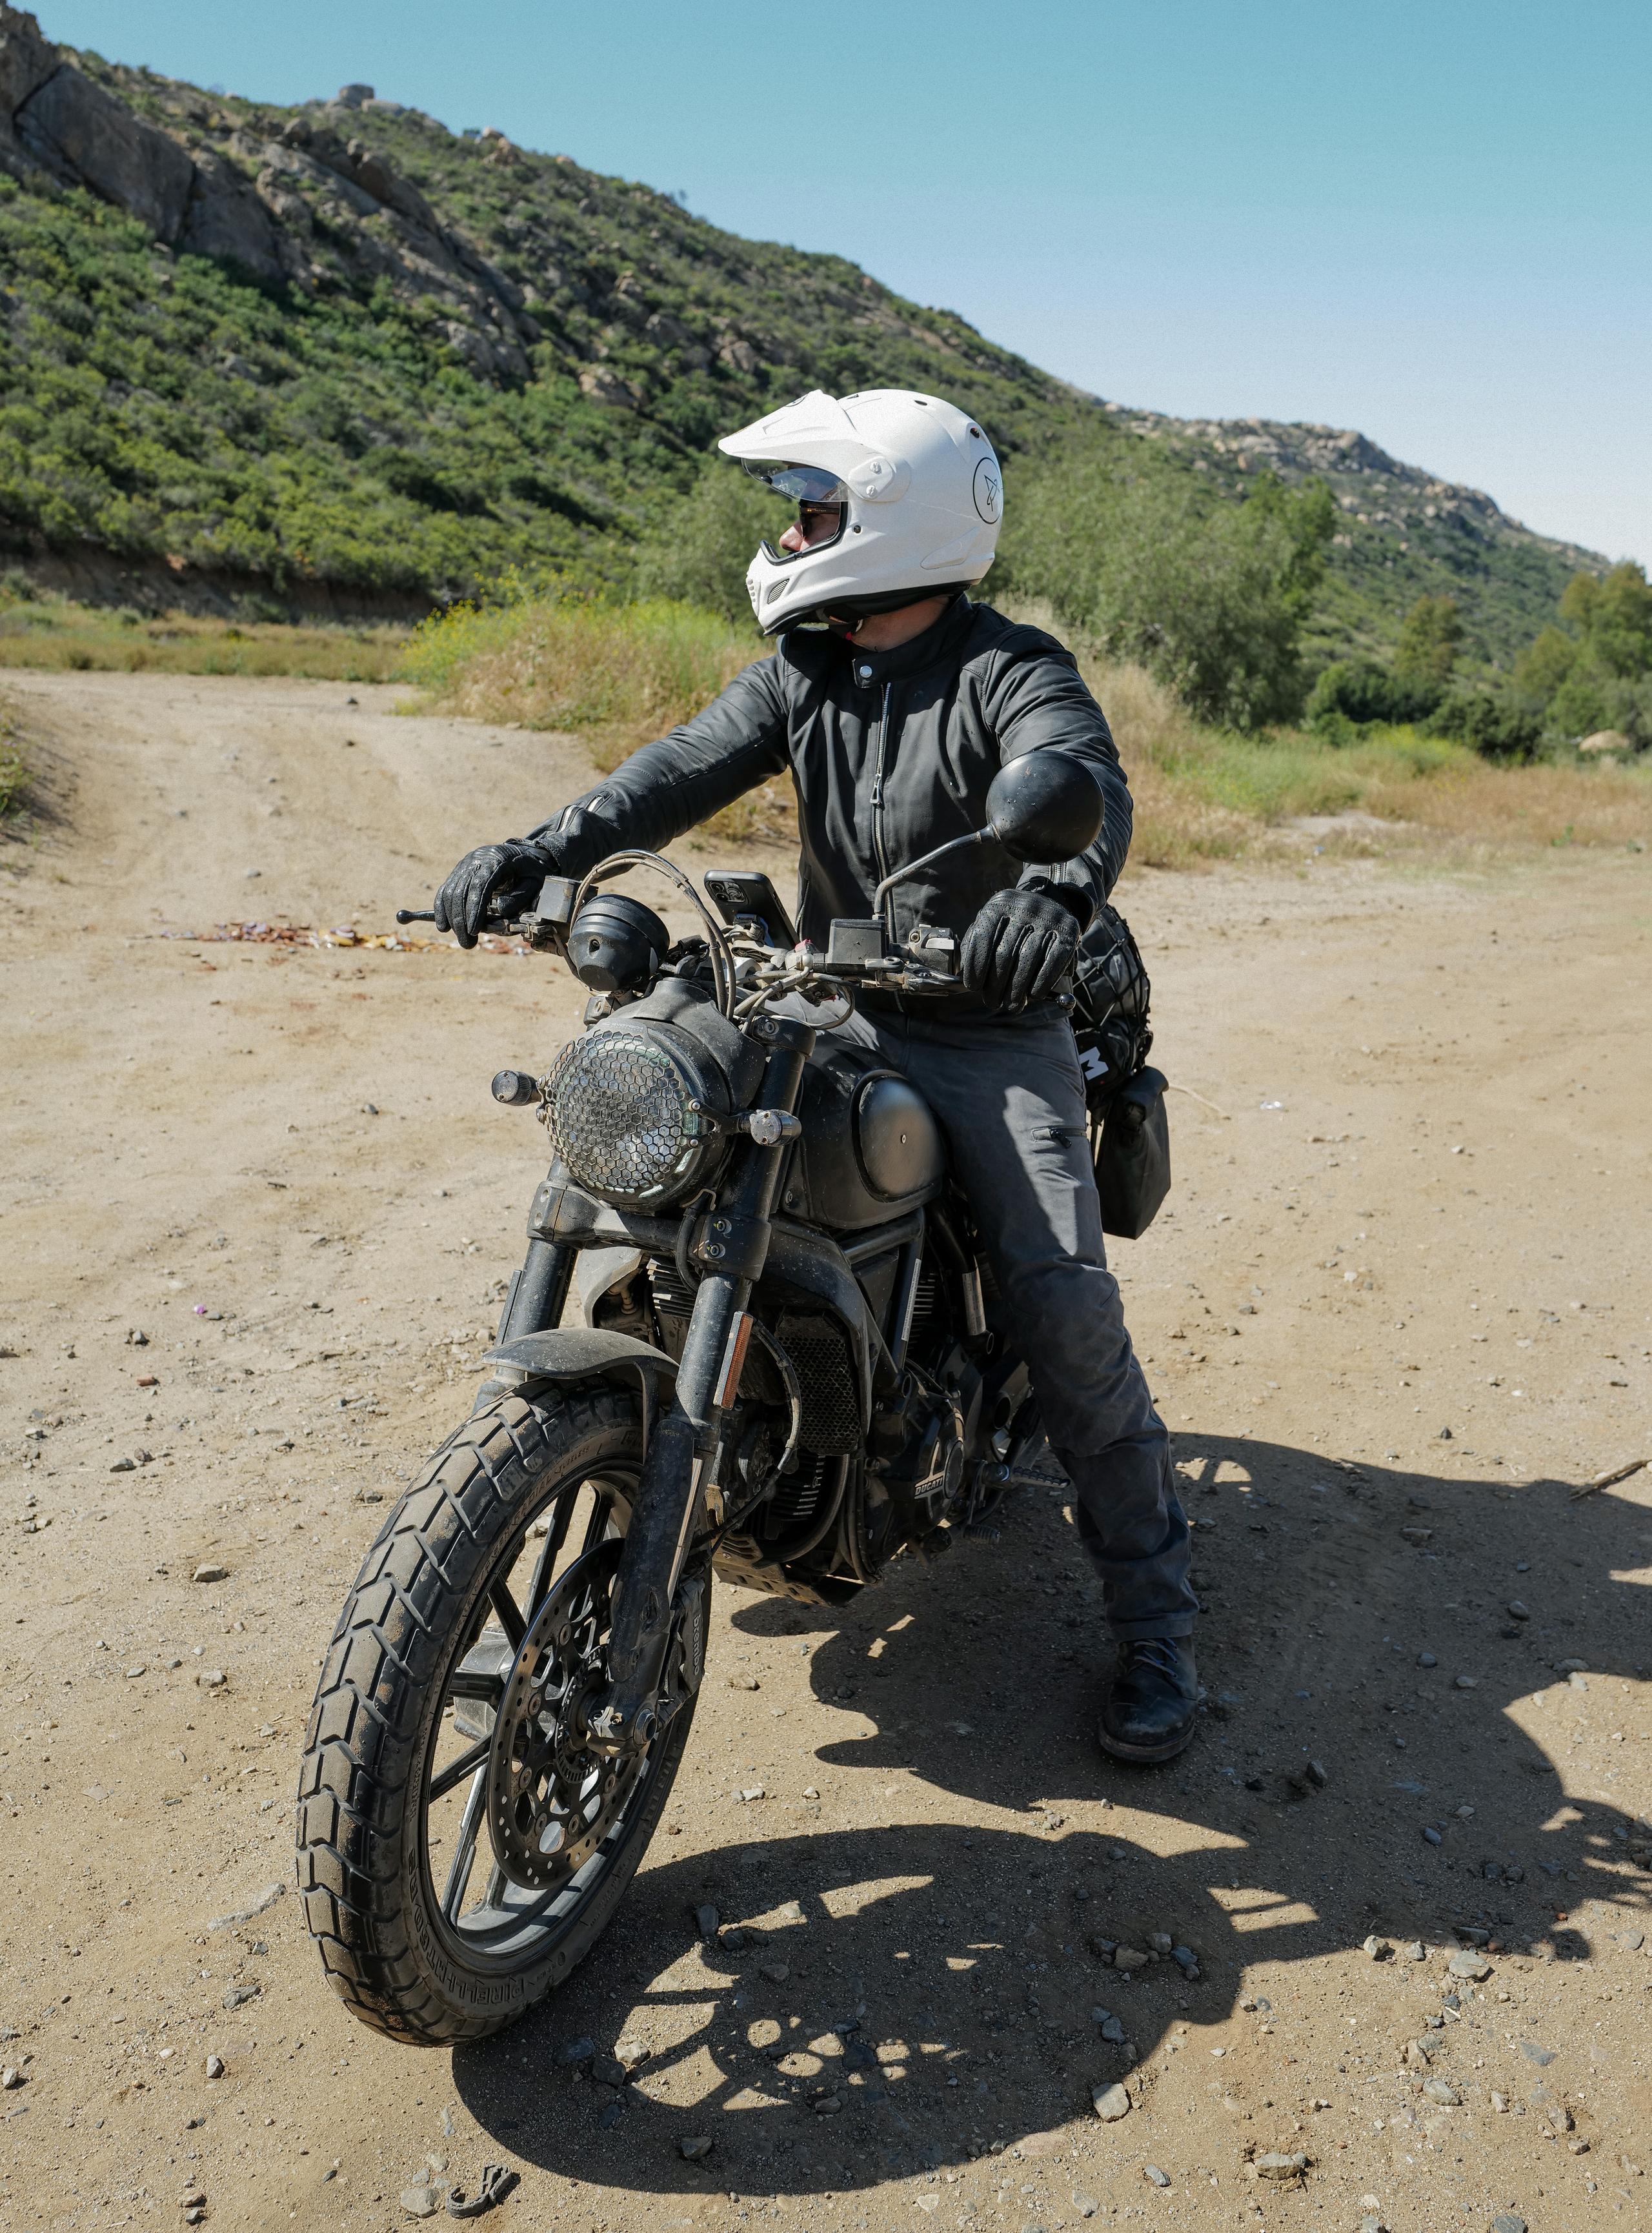 Motorcyclist idling on dirt path in Baja California